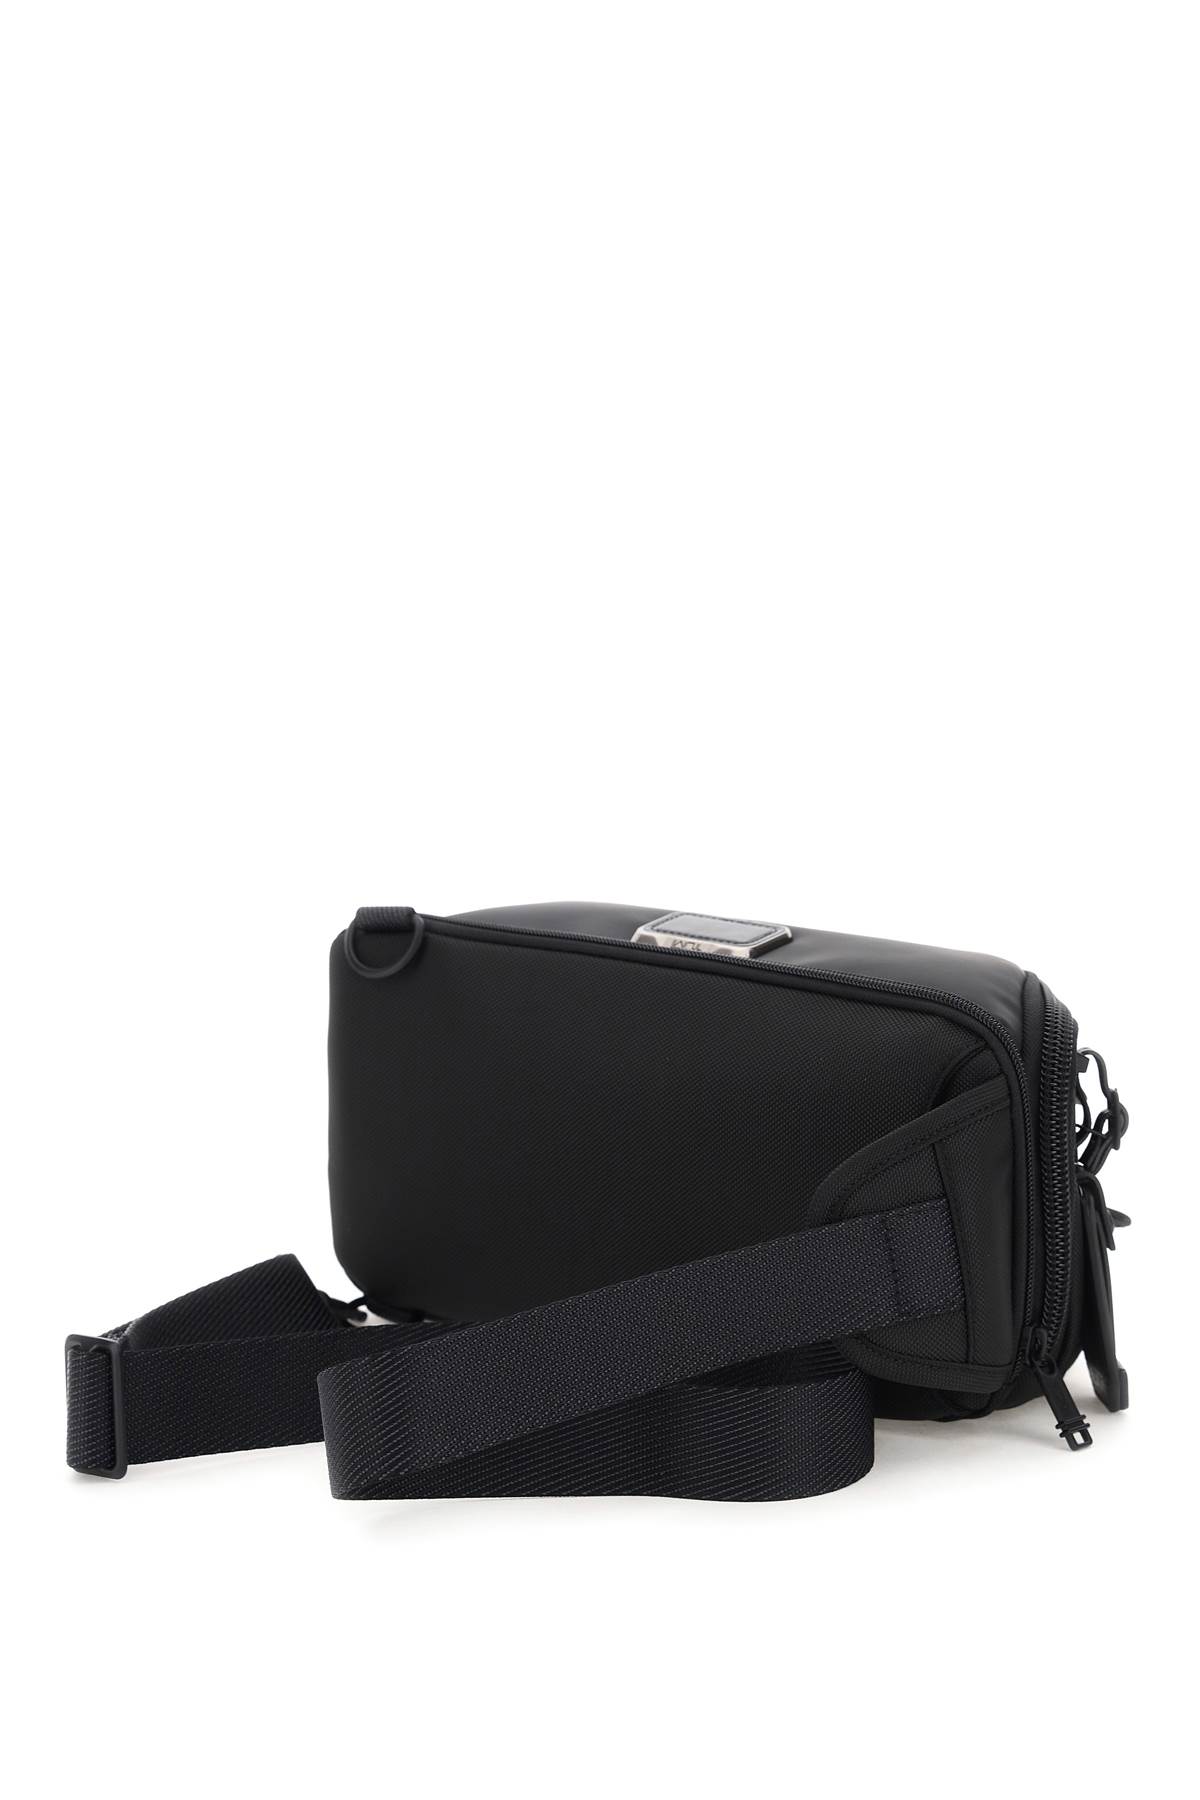 Tumi Platoon Sling Backpack In Black (black) | ModeSens